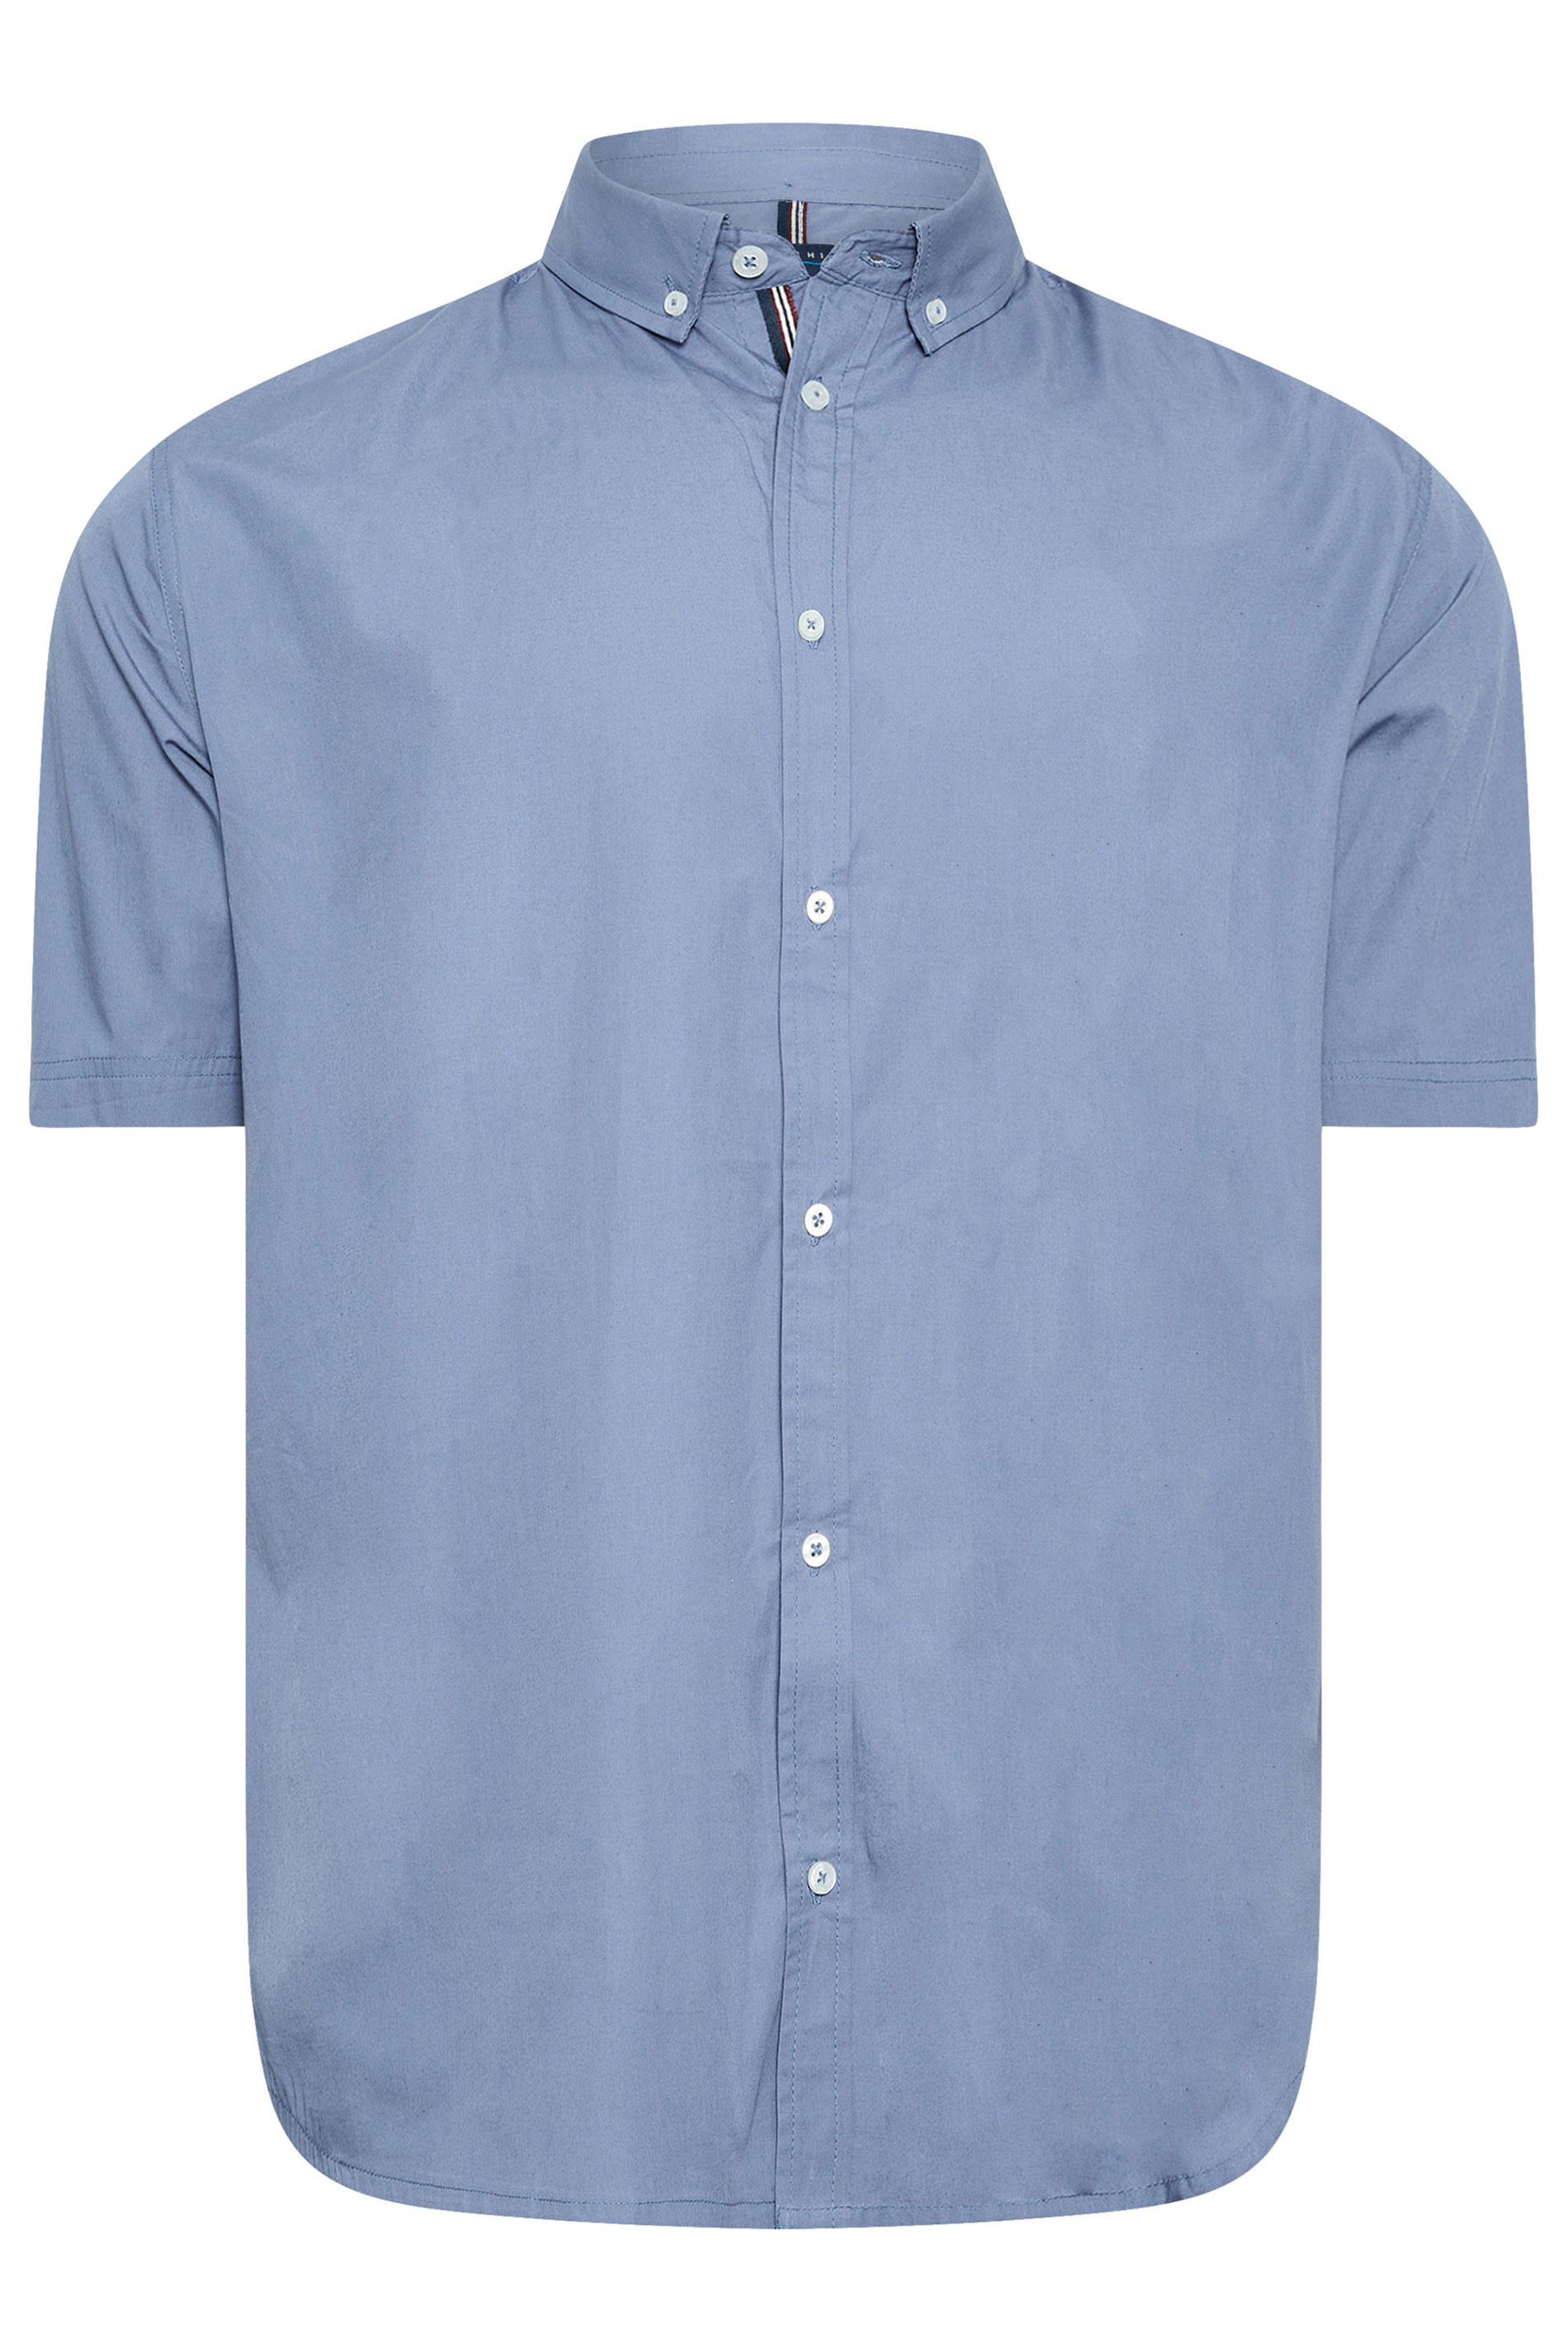 BadRhino Blue Cotton Poplin Short Sleeve Shirt | BadRhino